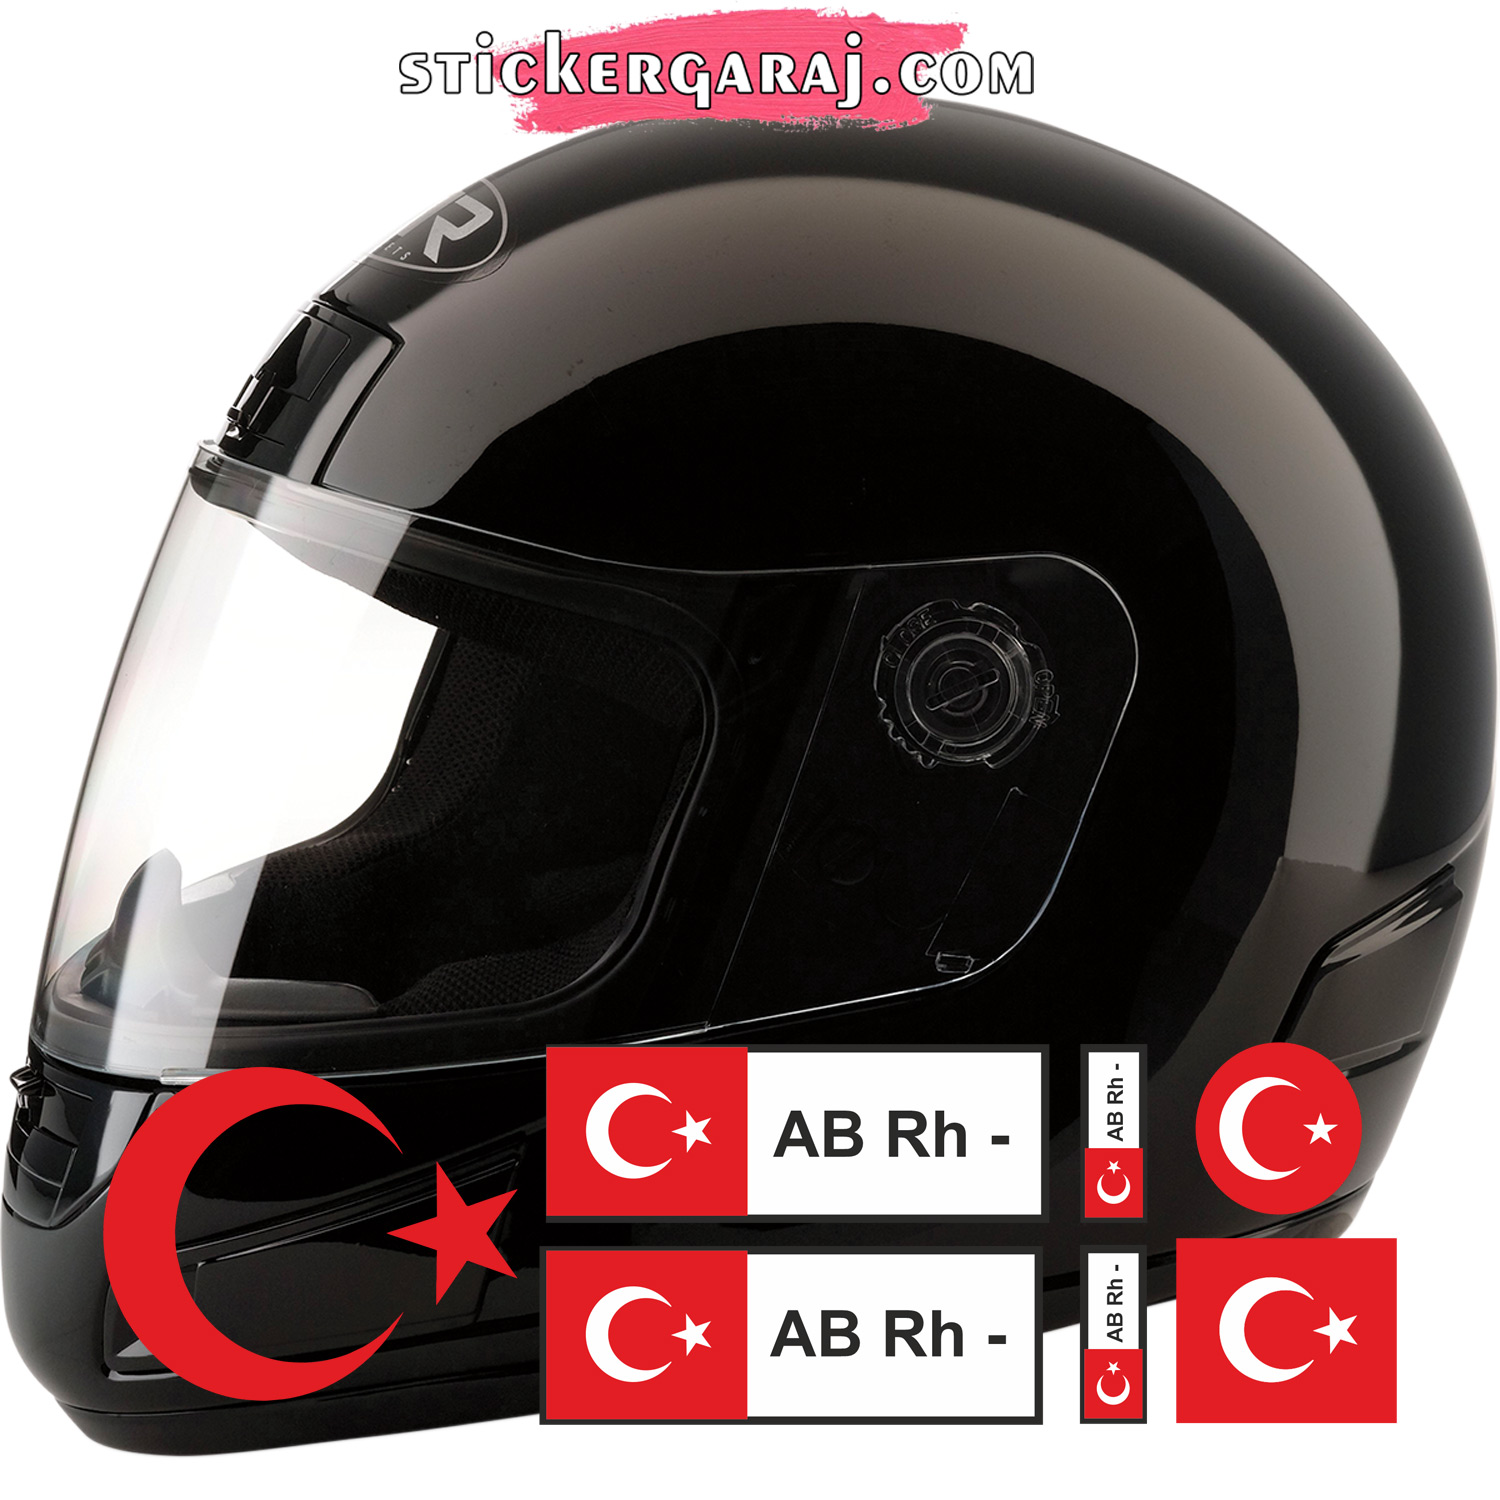 motosikler kask araba oto kan grubu sticker AB Rh 1 1 - Kan grubu AB Rh - Sticker